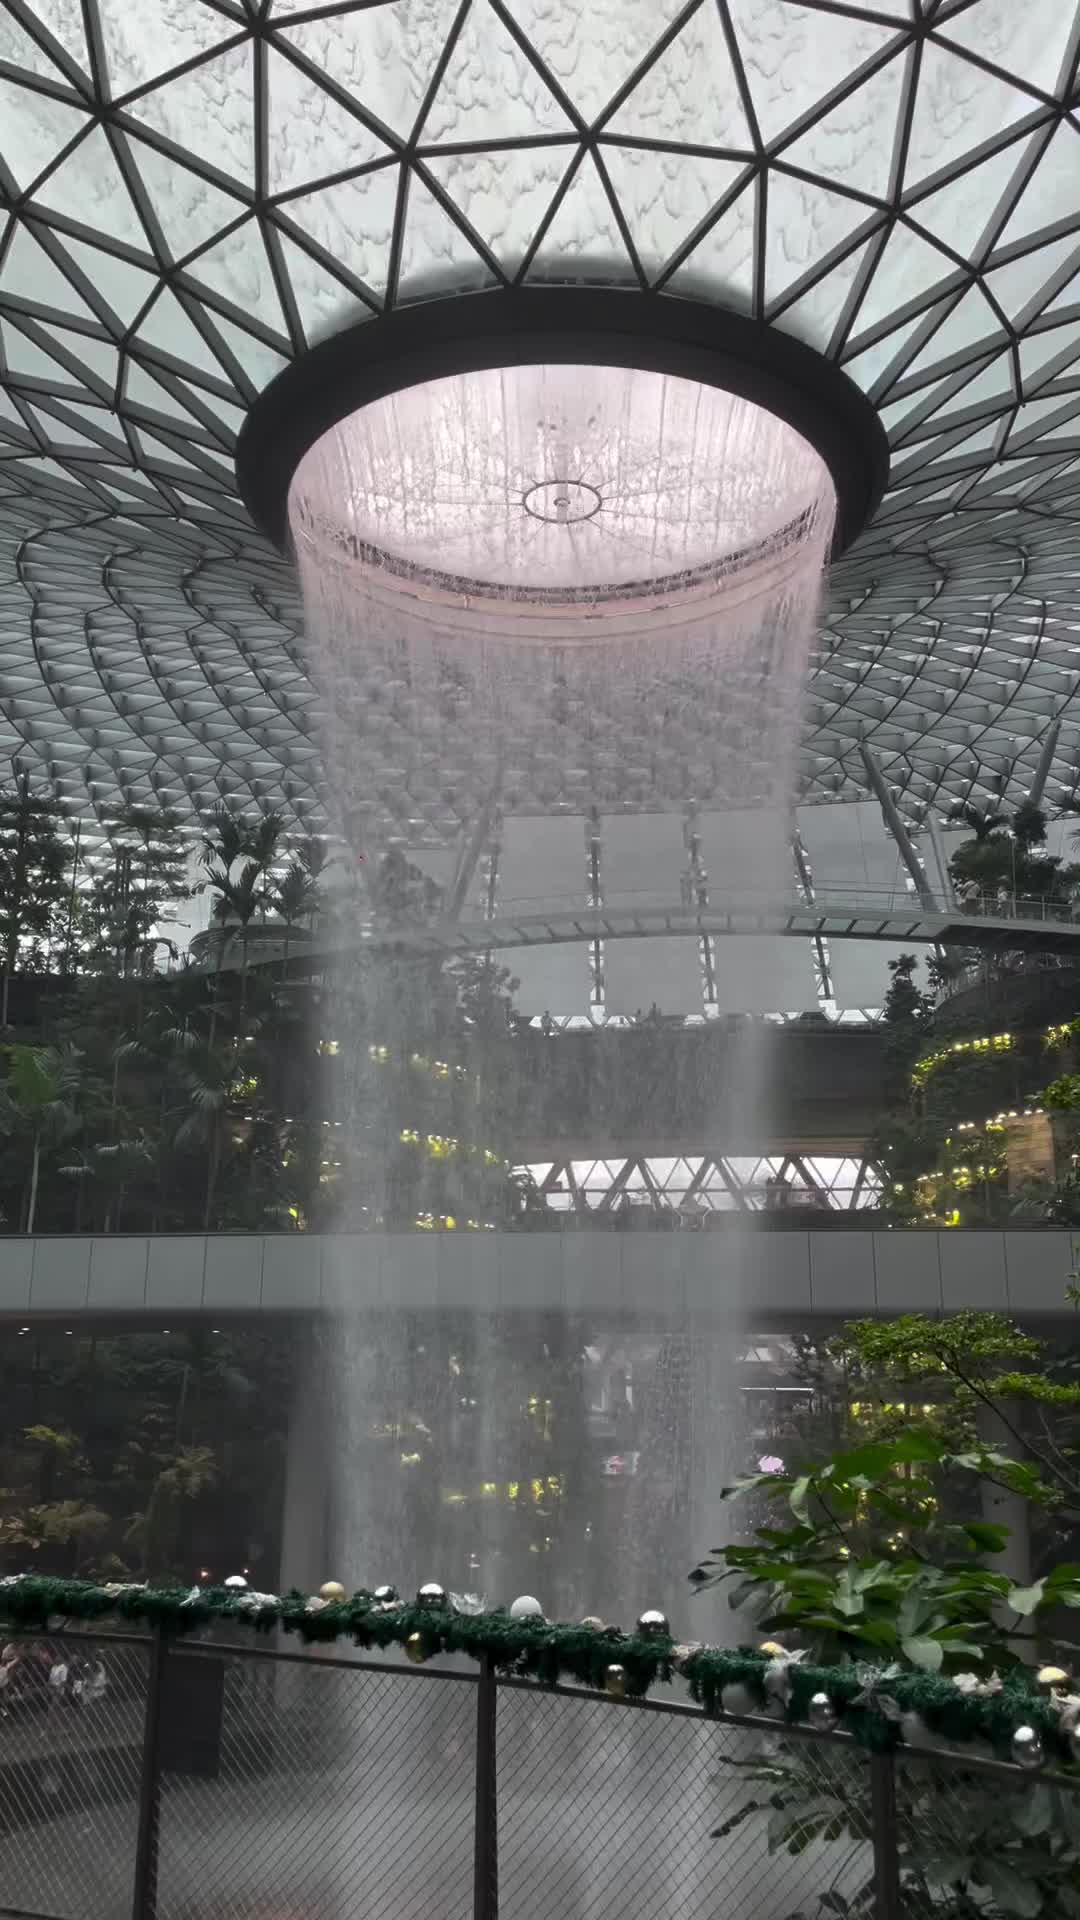 Breathtaking Scenes at Jewel Changi Airport 🎄✨